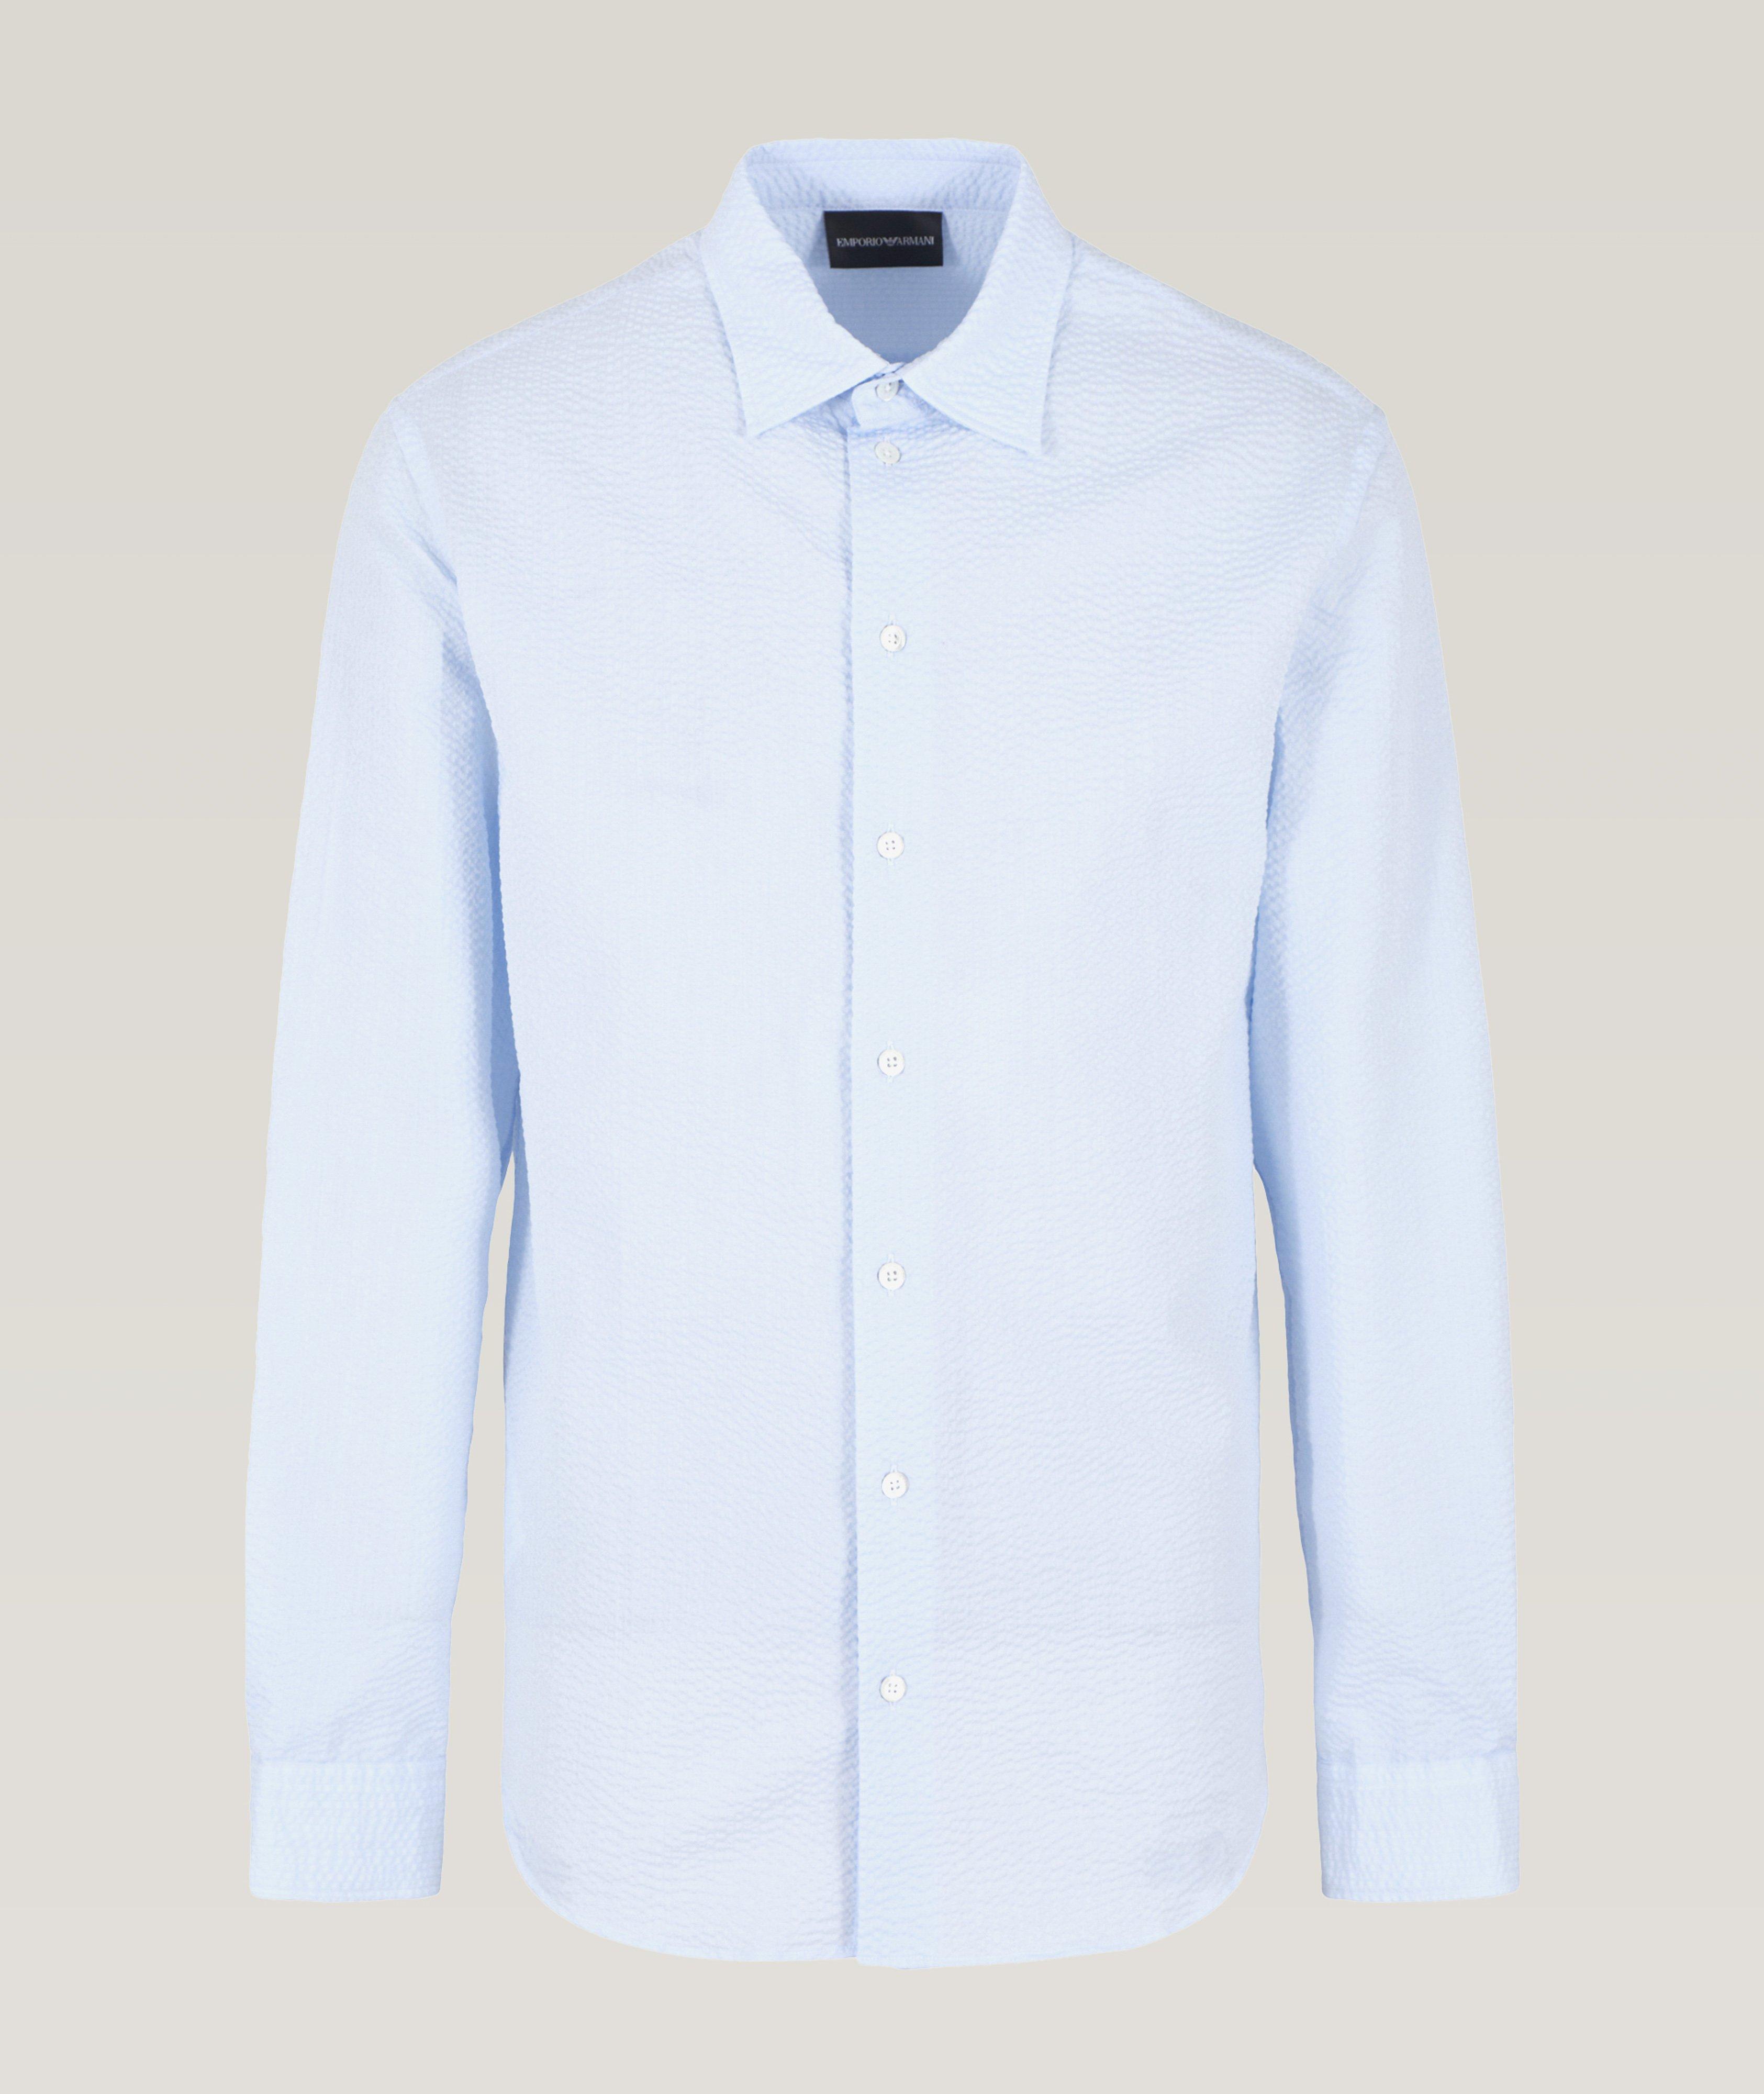 Asymmetrical Flocked Cotton Sport Shirt image 0